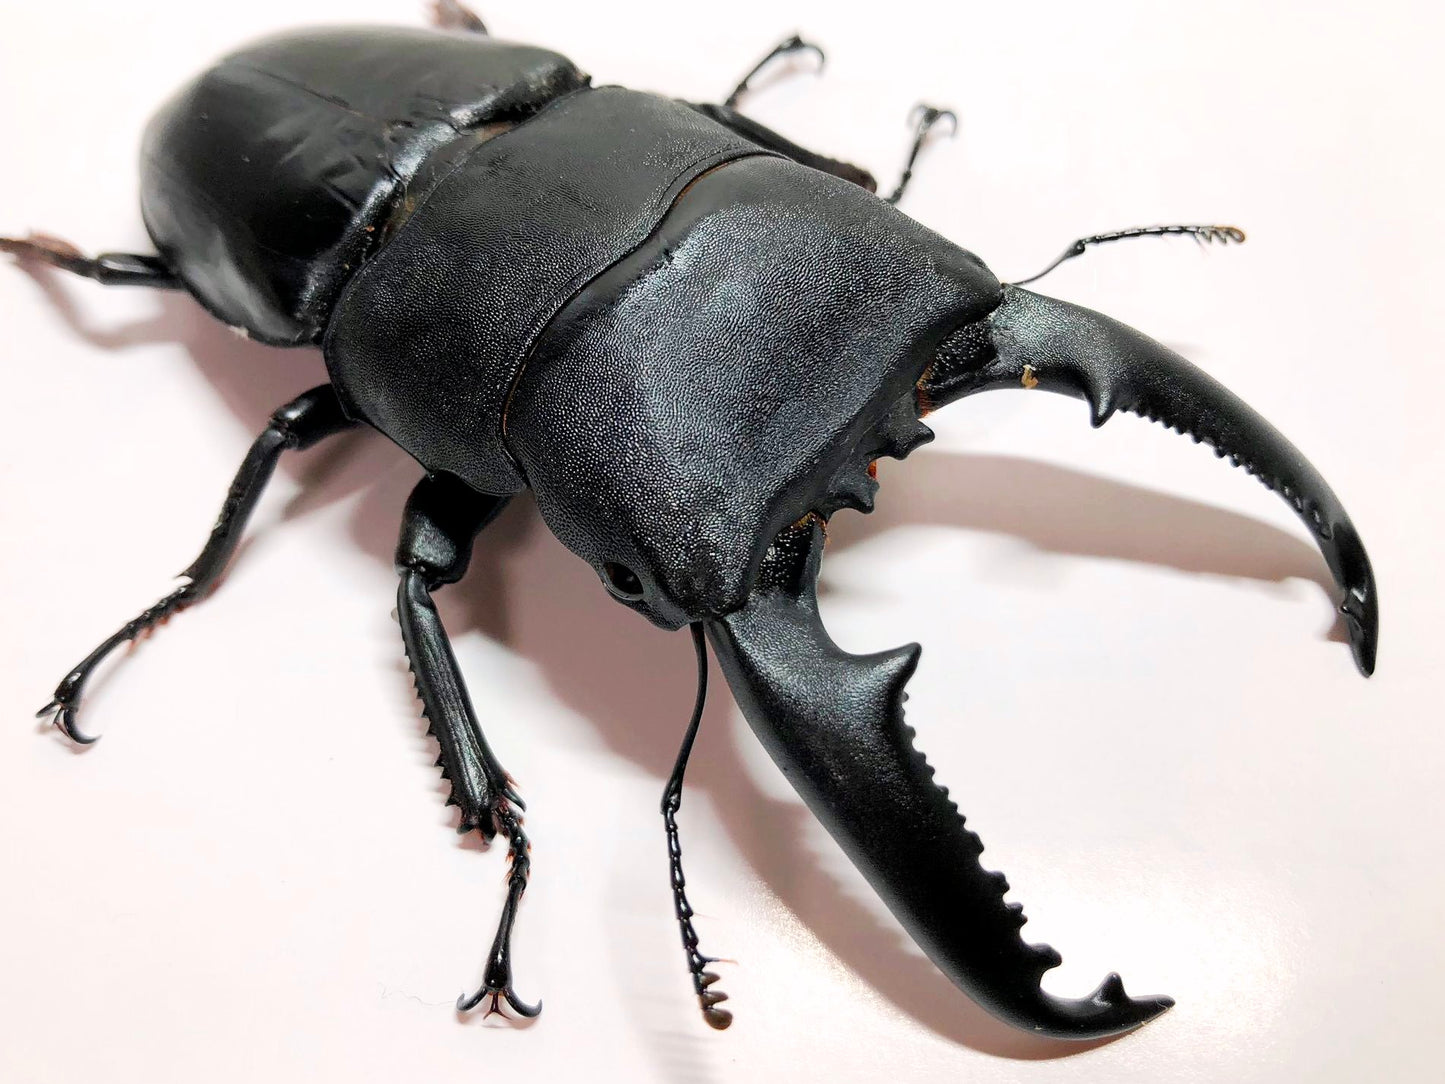 ⨂ ADULTS - Palawan Stag Beetle, (Dorcus palawanicus)